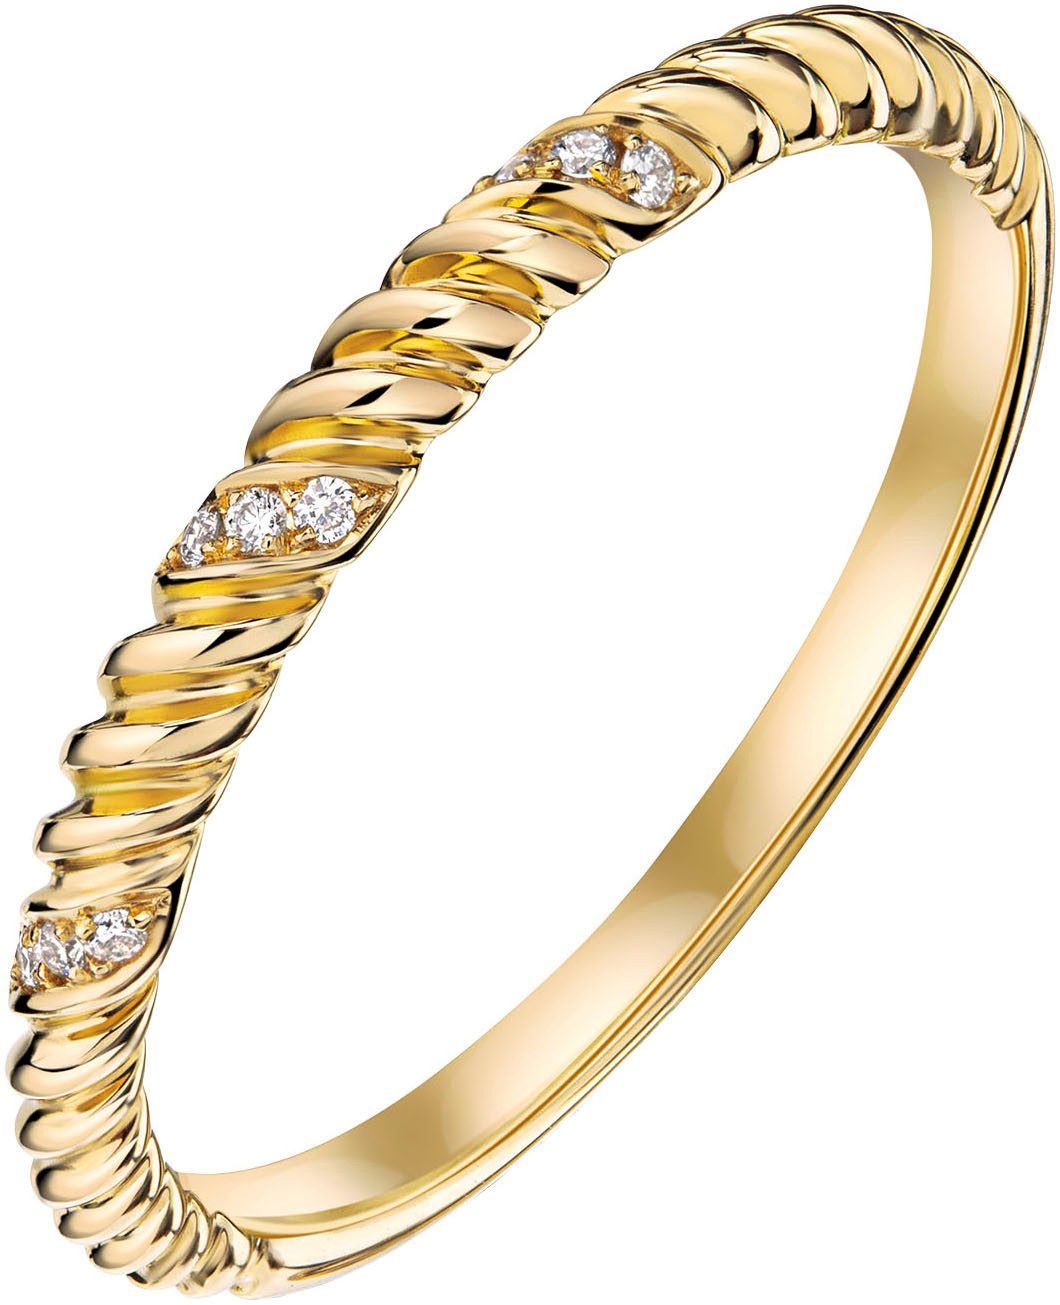 Firetti Fingerring Schmuck Geschenk Gold 585 Goldring Twisted Diamond, mit Brillanten